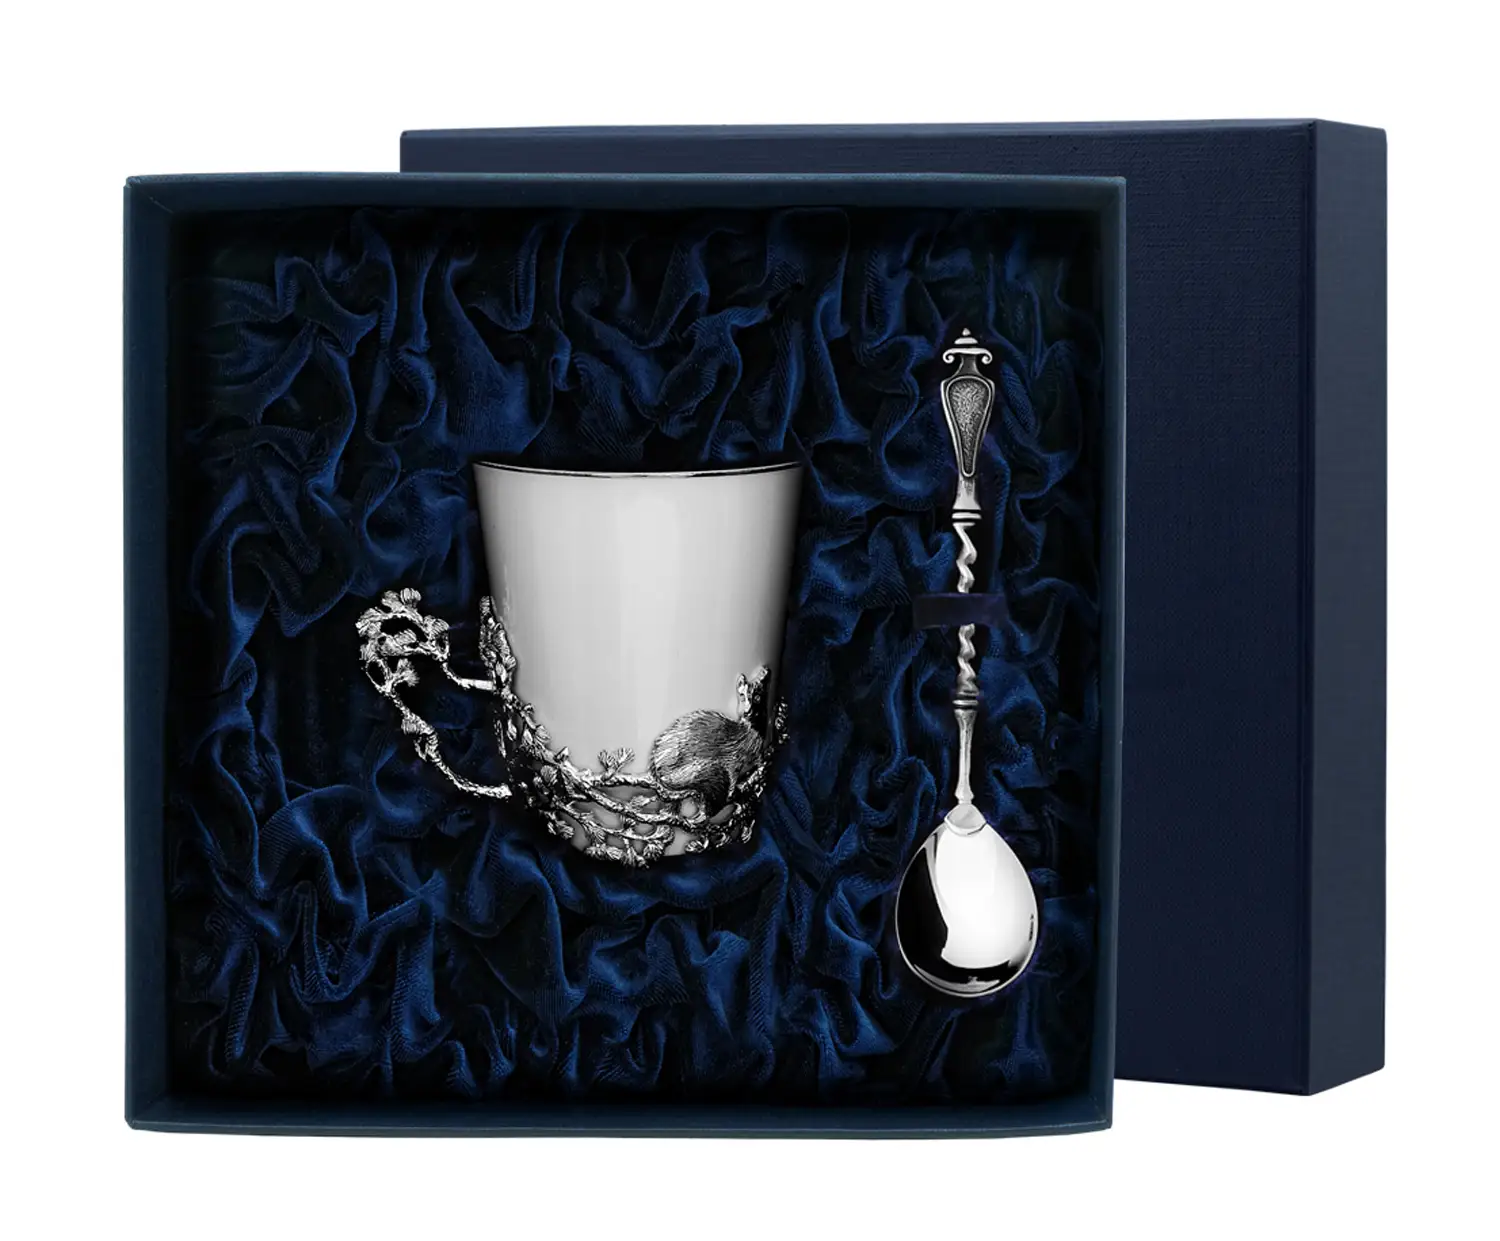 Набор чайная чашка Куница: ложка, чашка (Серебро 925) набор чайная чашка лебедь ложка чашка серебро 925